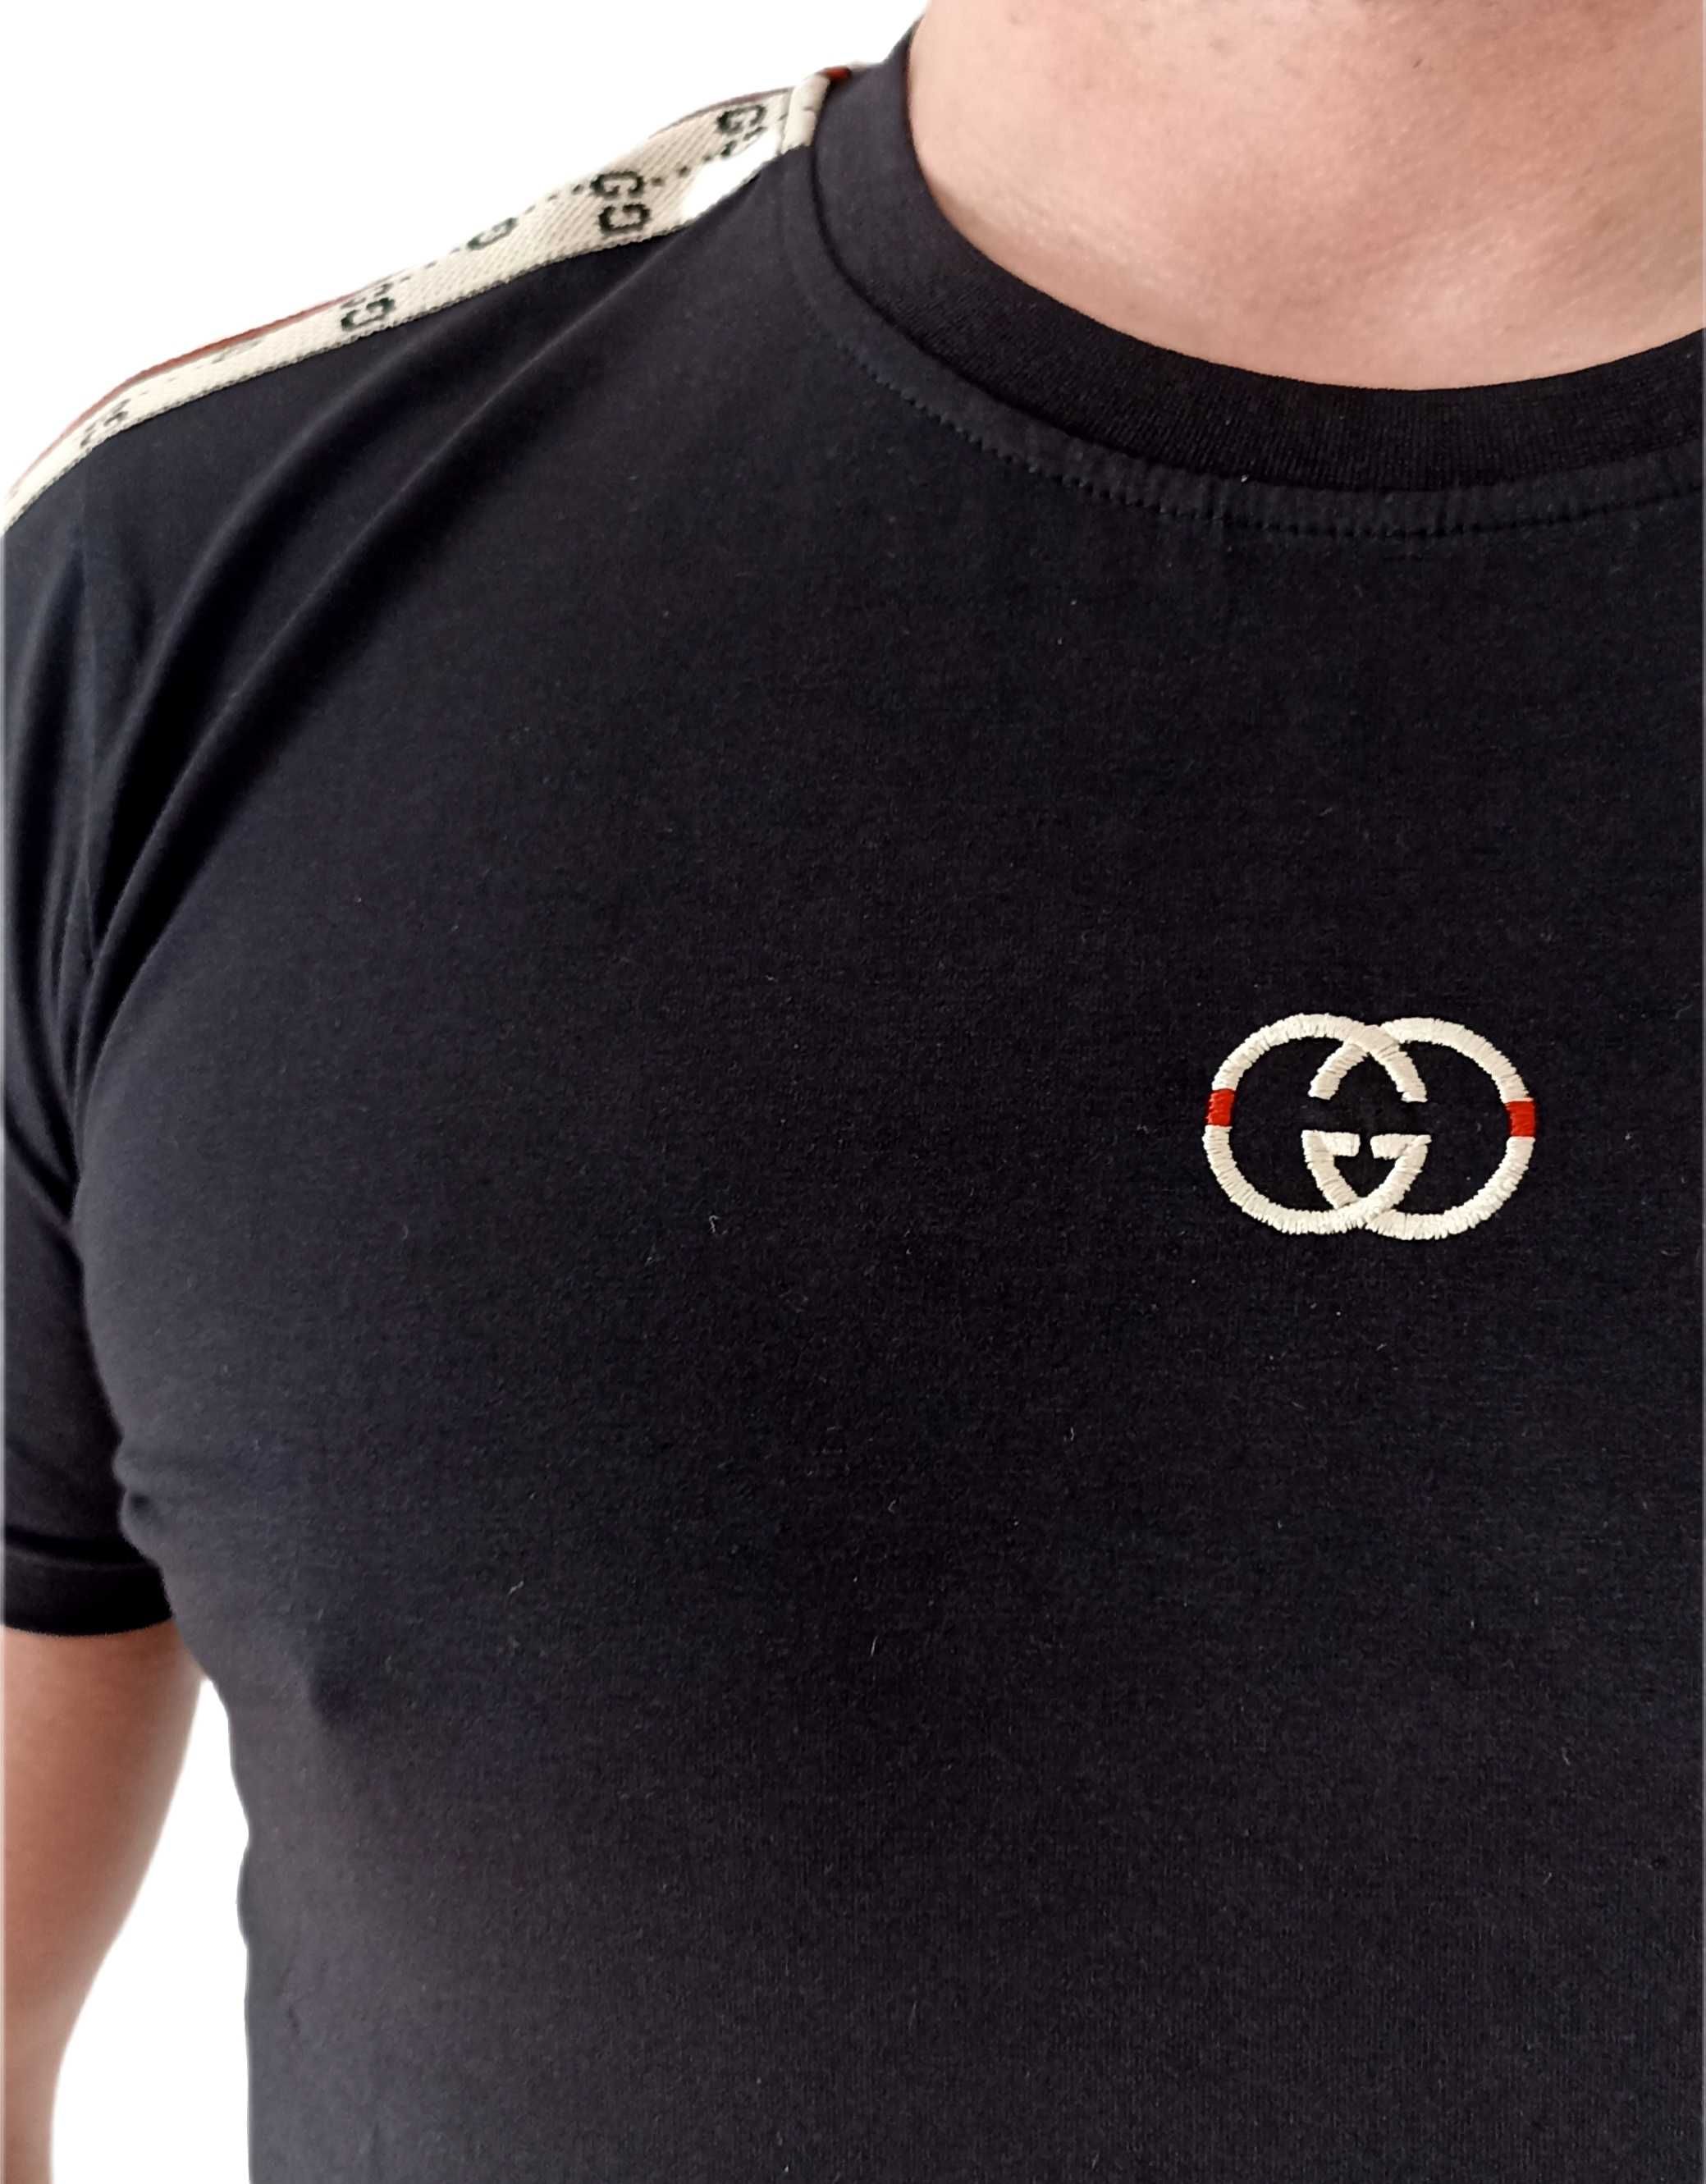 GUCCI T-shirt Koszulka Czarna ROZ.S,M,,XL,